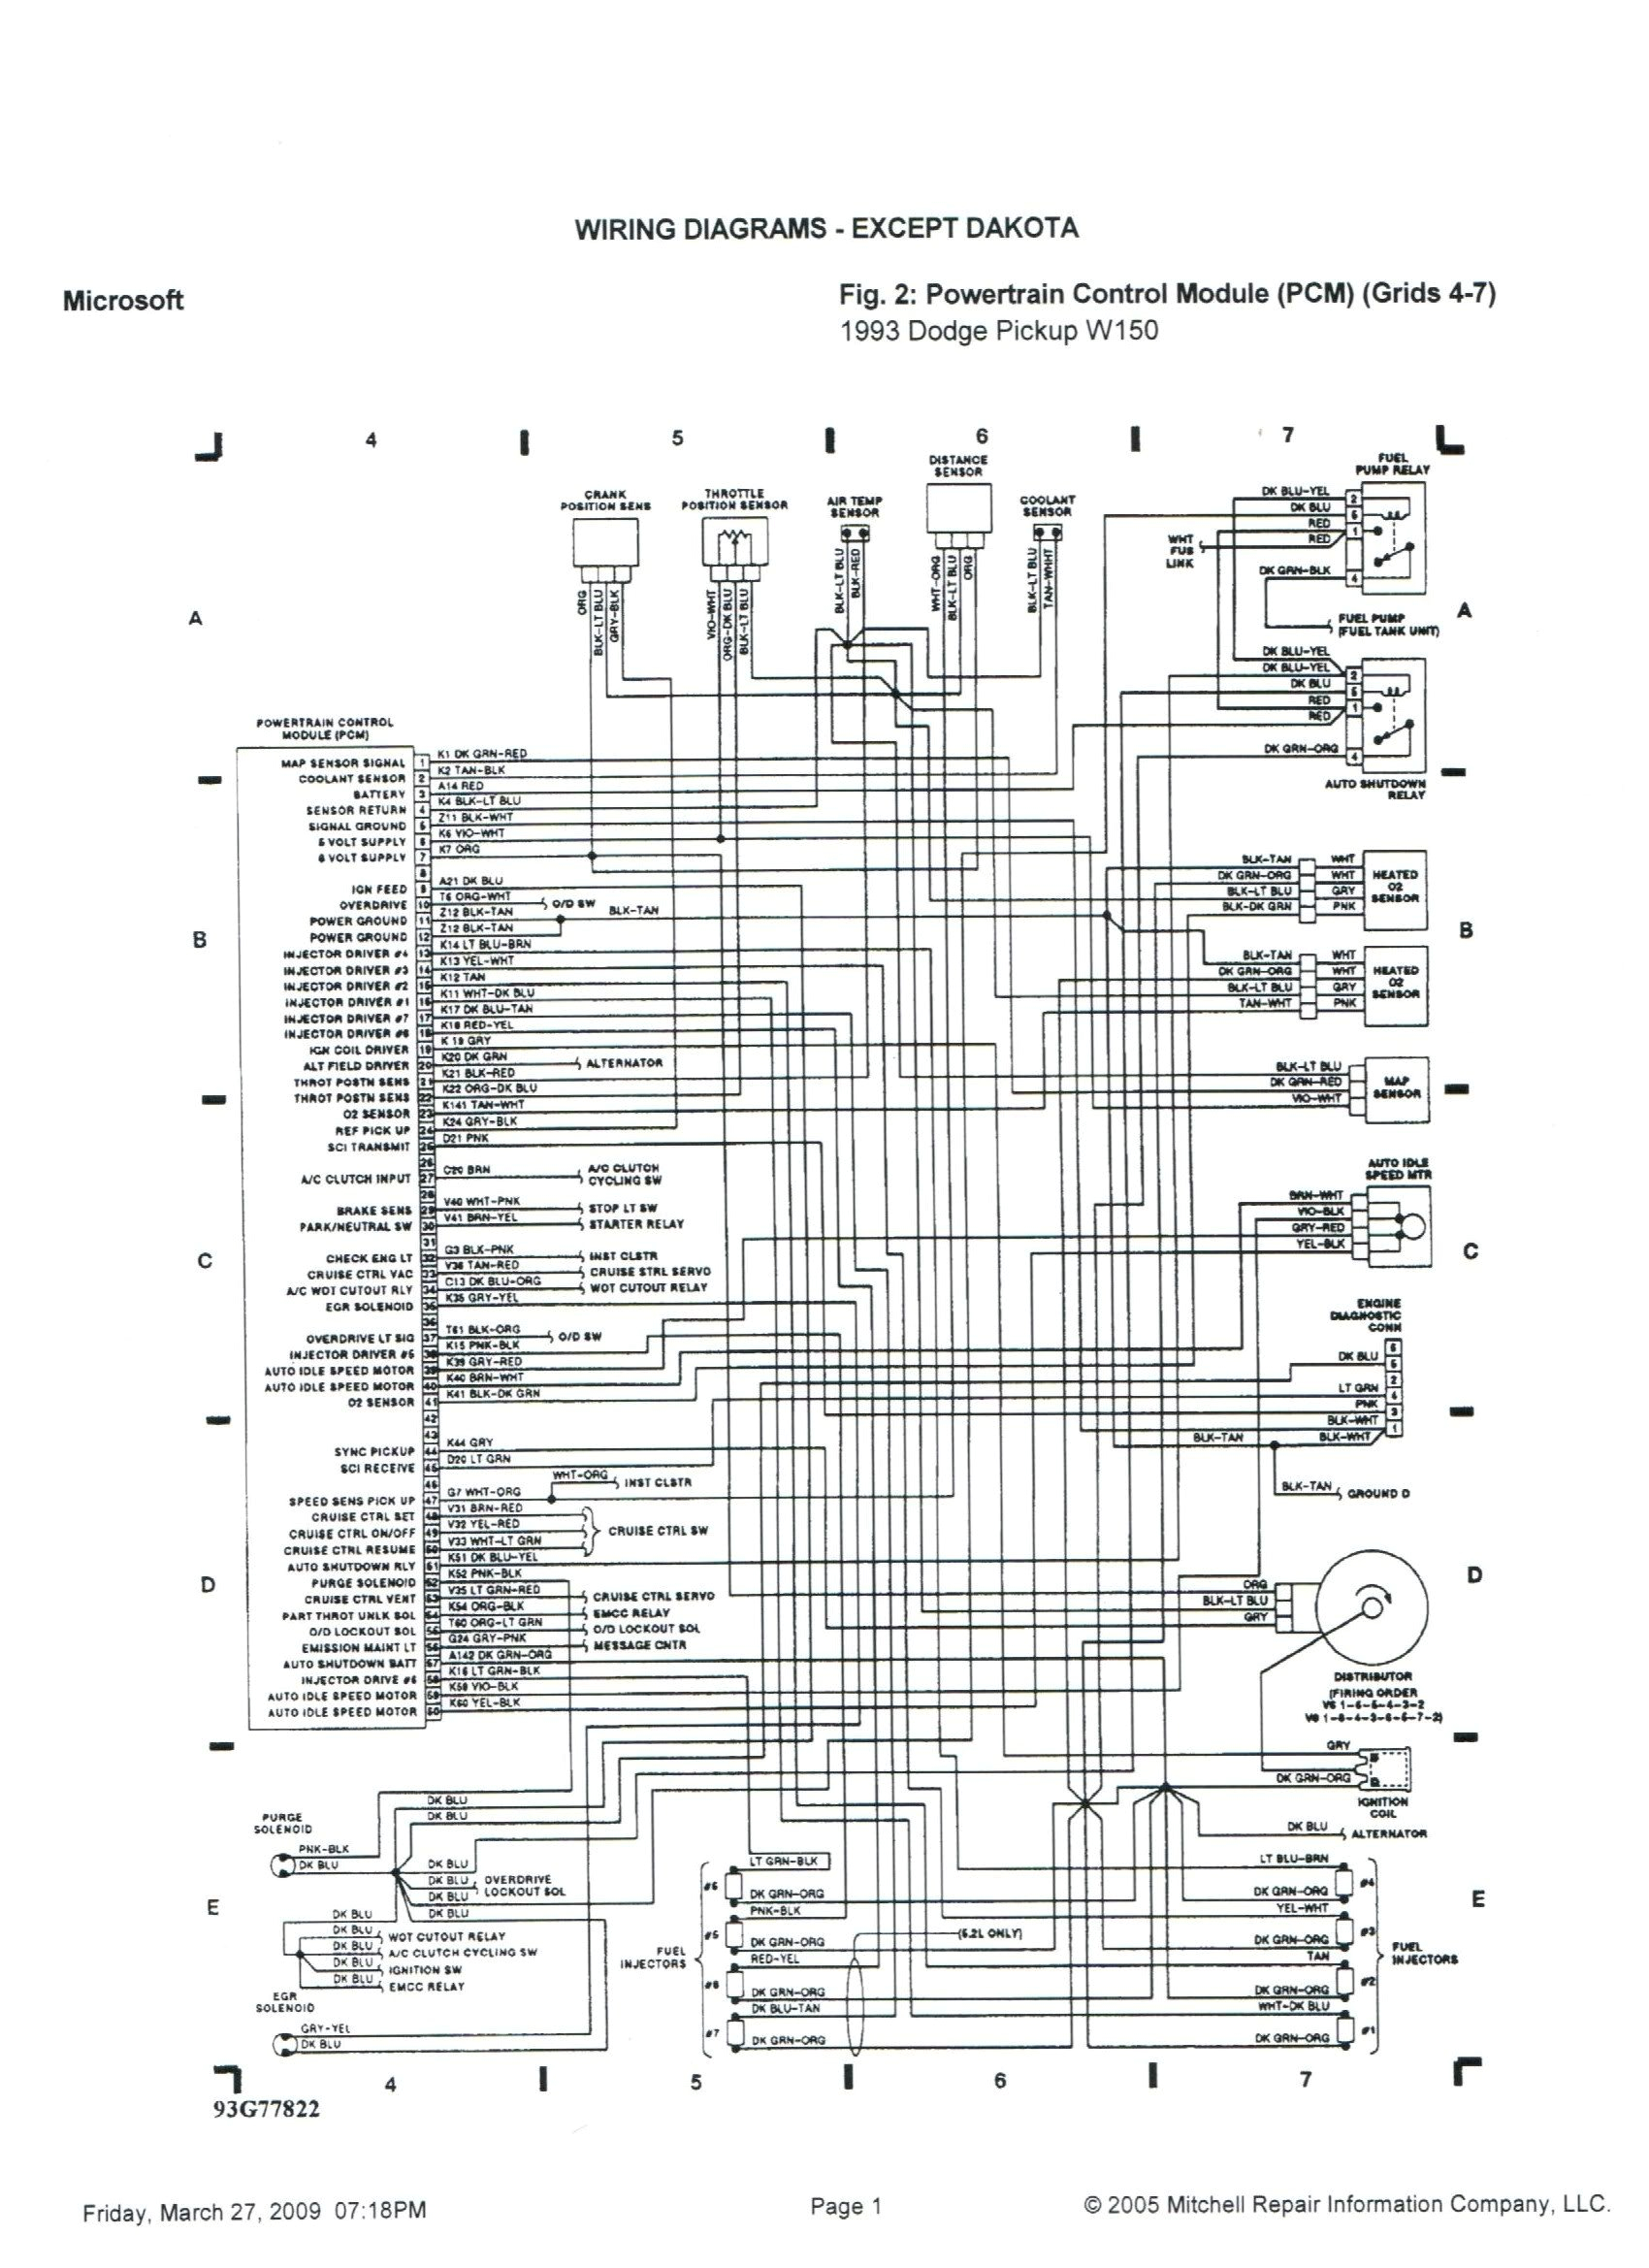 m1010 wiring diagrams wiring diagram show m1010 wiring diagrams